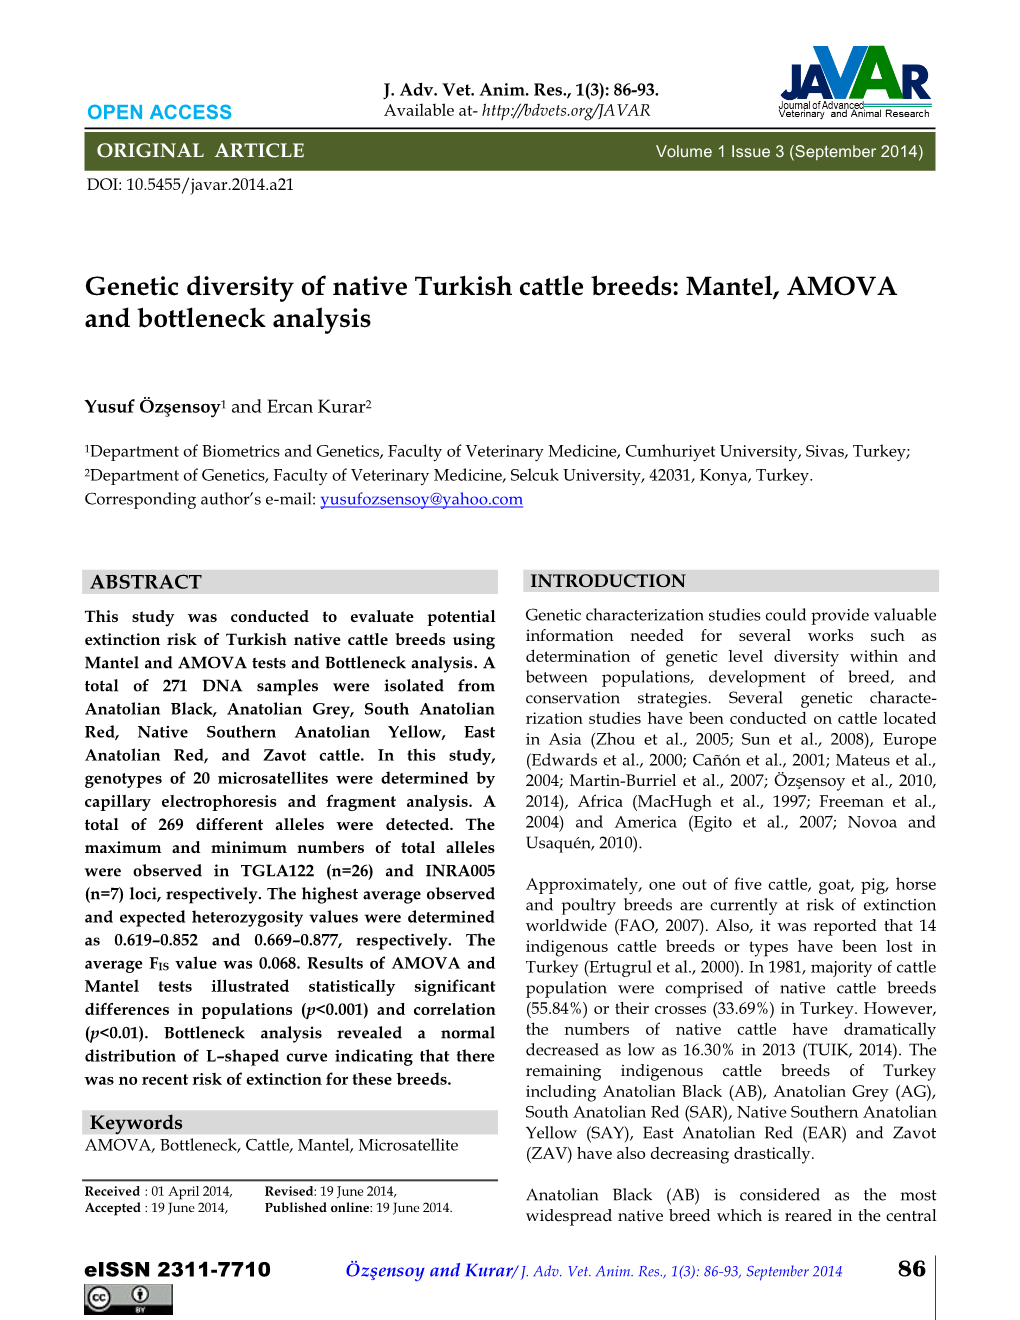 Genetic Diversity of Native Turkish Cattle Breeds: Mantel, AMOVA and Bottleneck Analysis